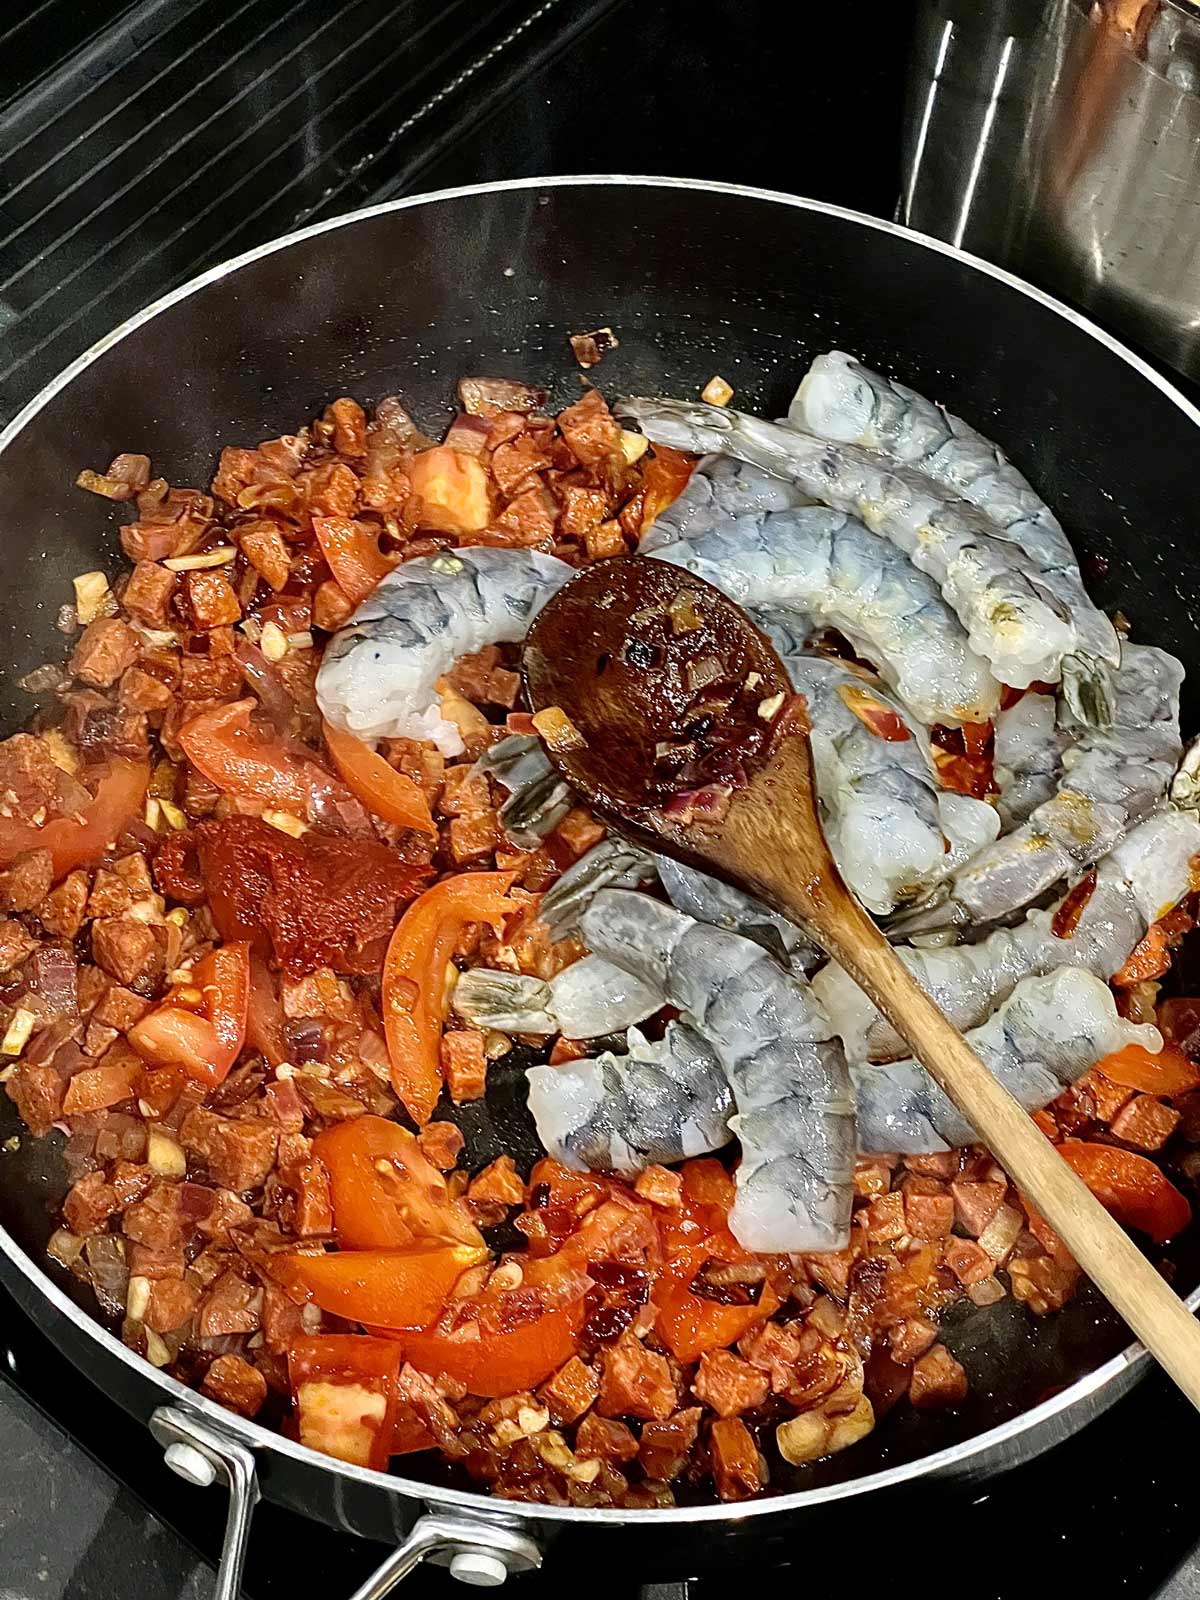 Prawn and tomato paste added to the pan where chorizo, onion, garlic, fresh tomatoes were cooking for this prawn and chorizo pasta dish.